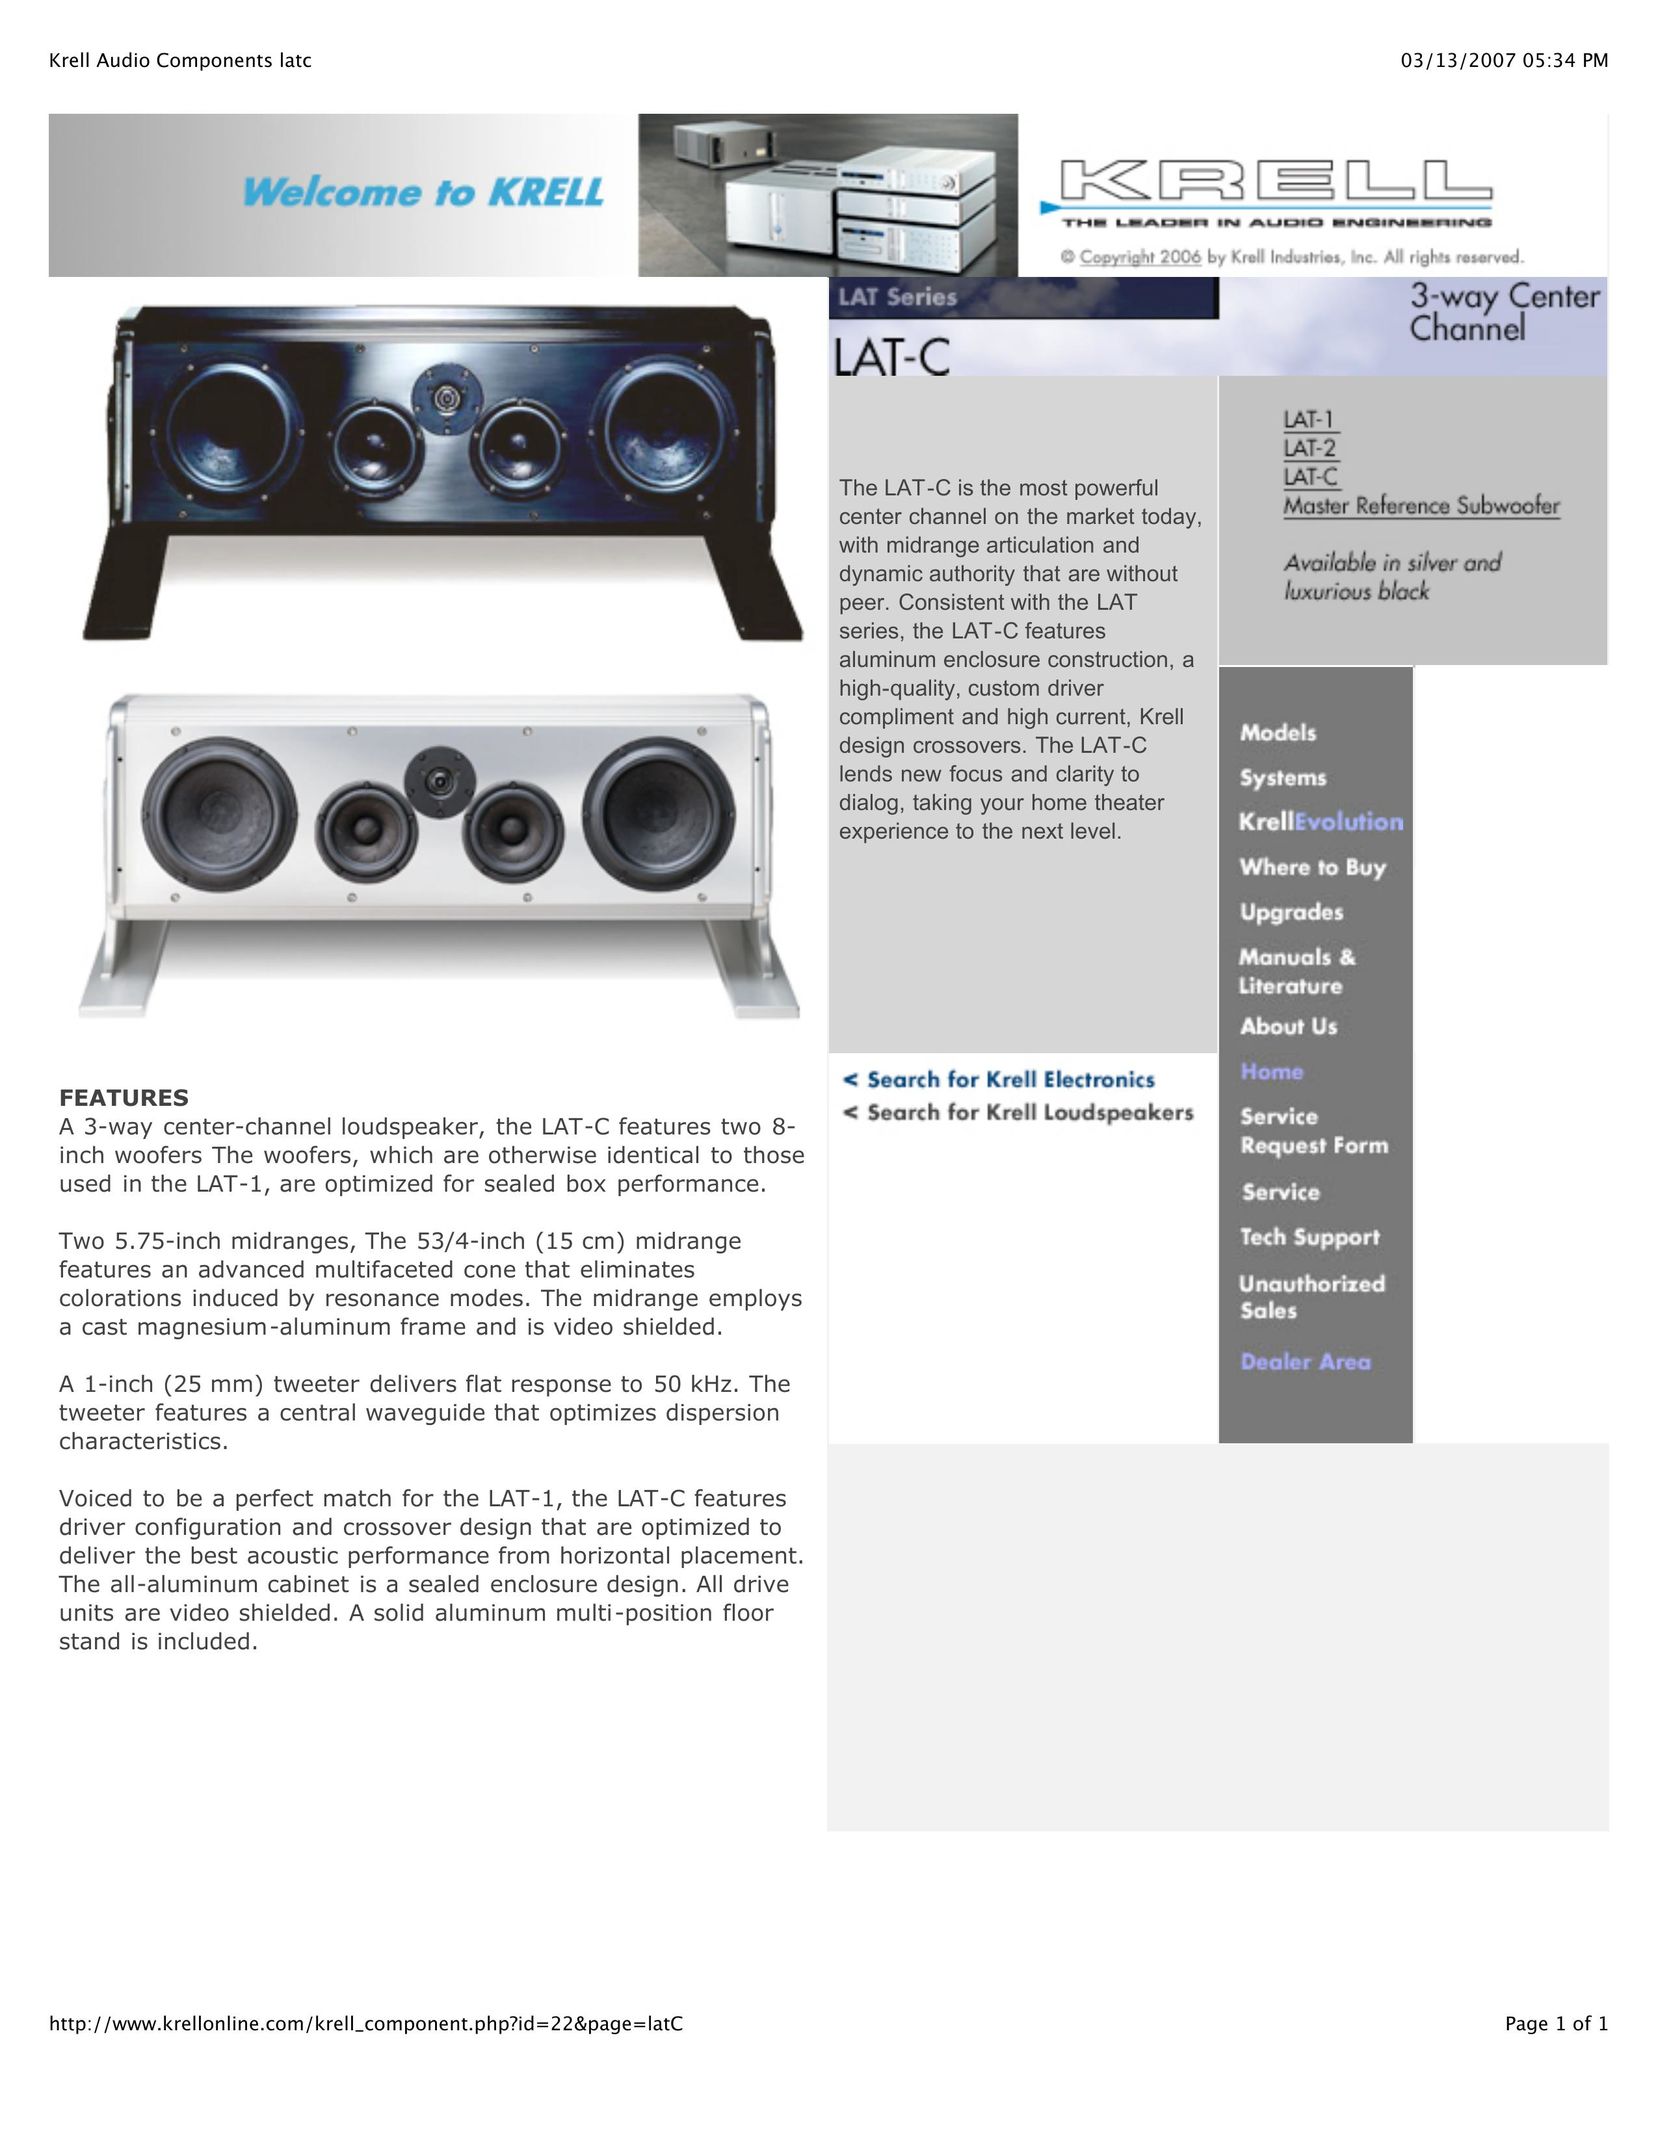 Krell Industries LAT-C Speaker User Manual